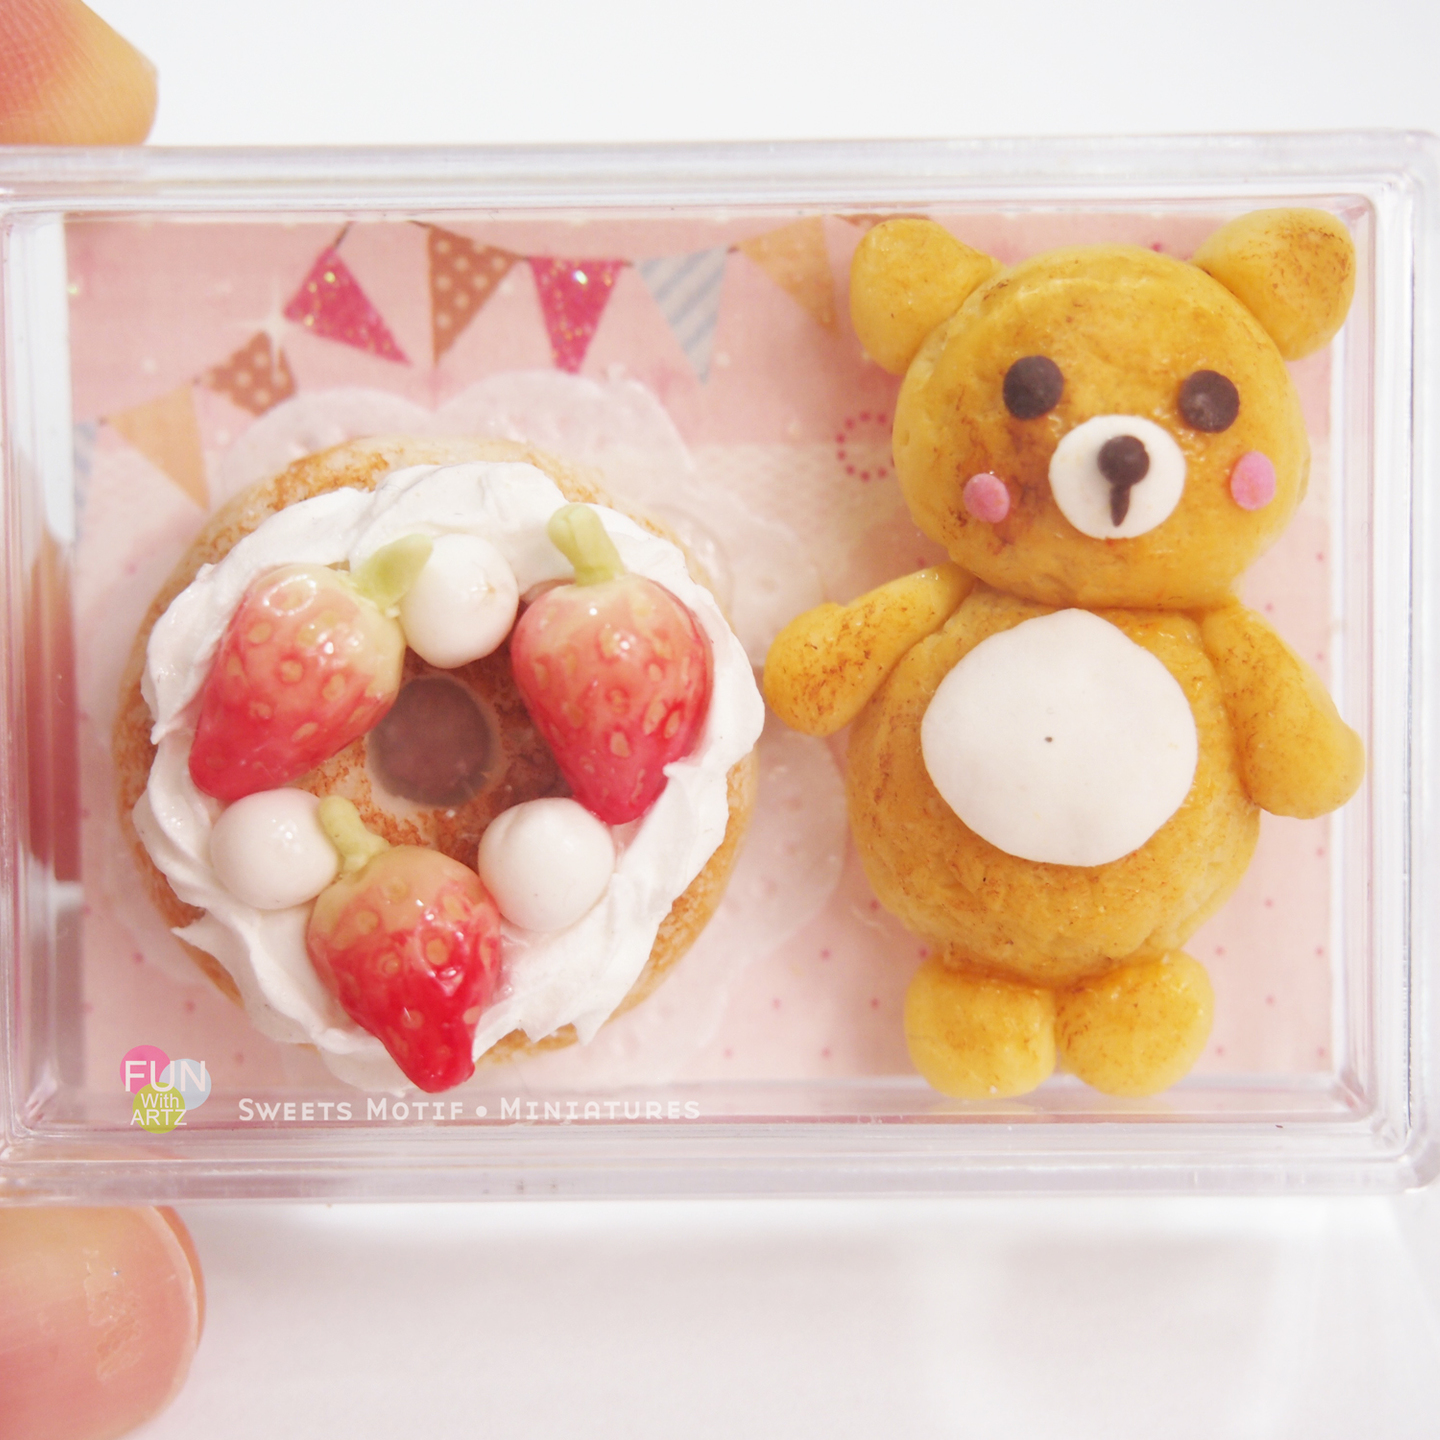 Dollhouse Display Rilakkuma Cookie and Strawberry Cake